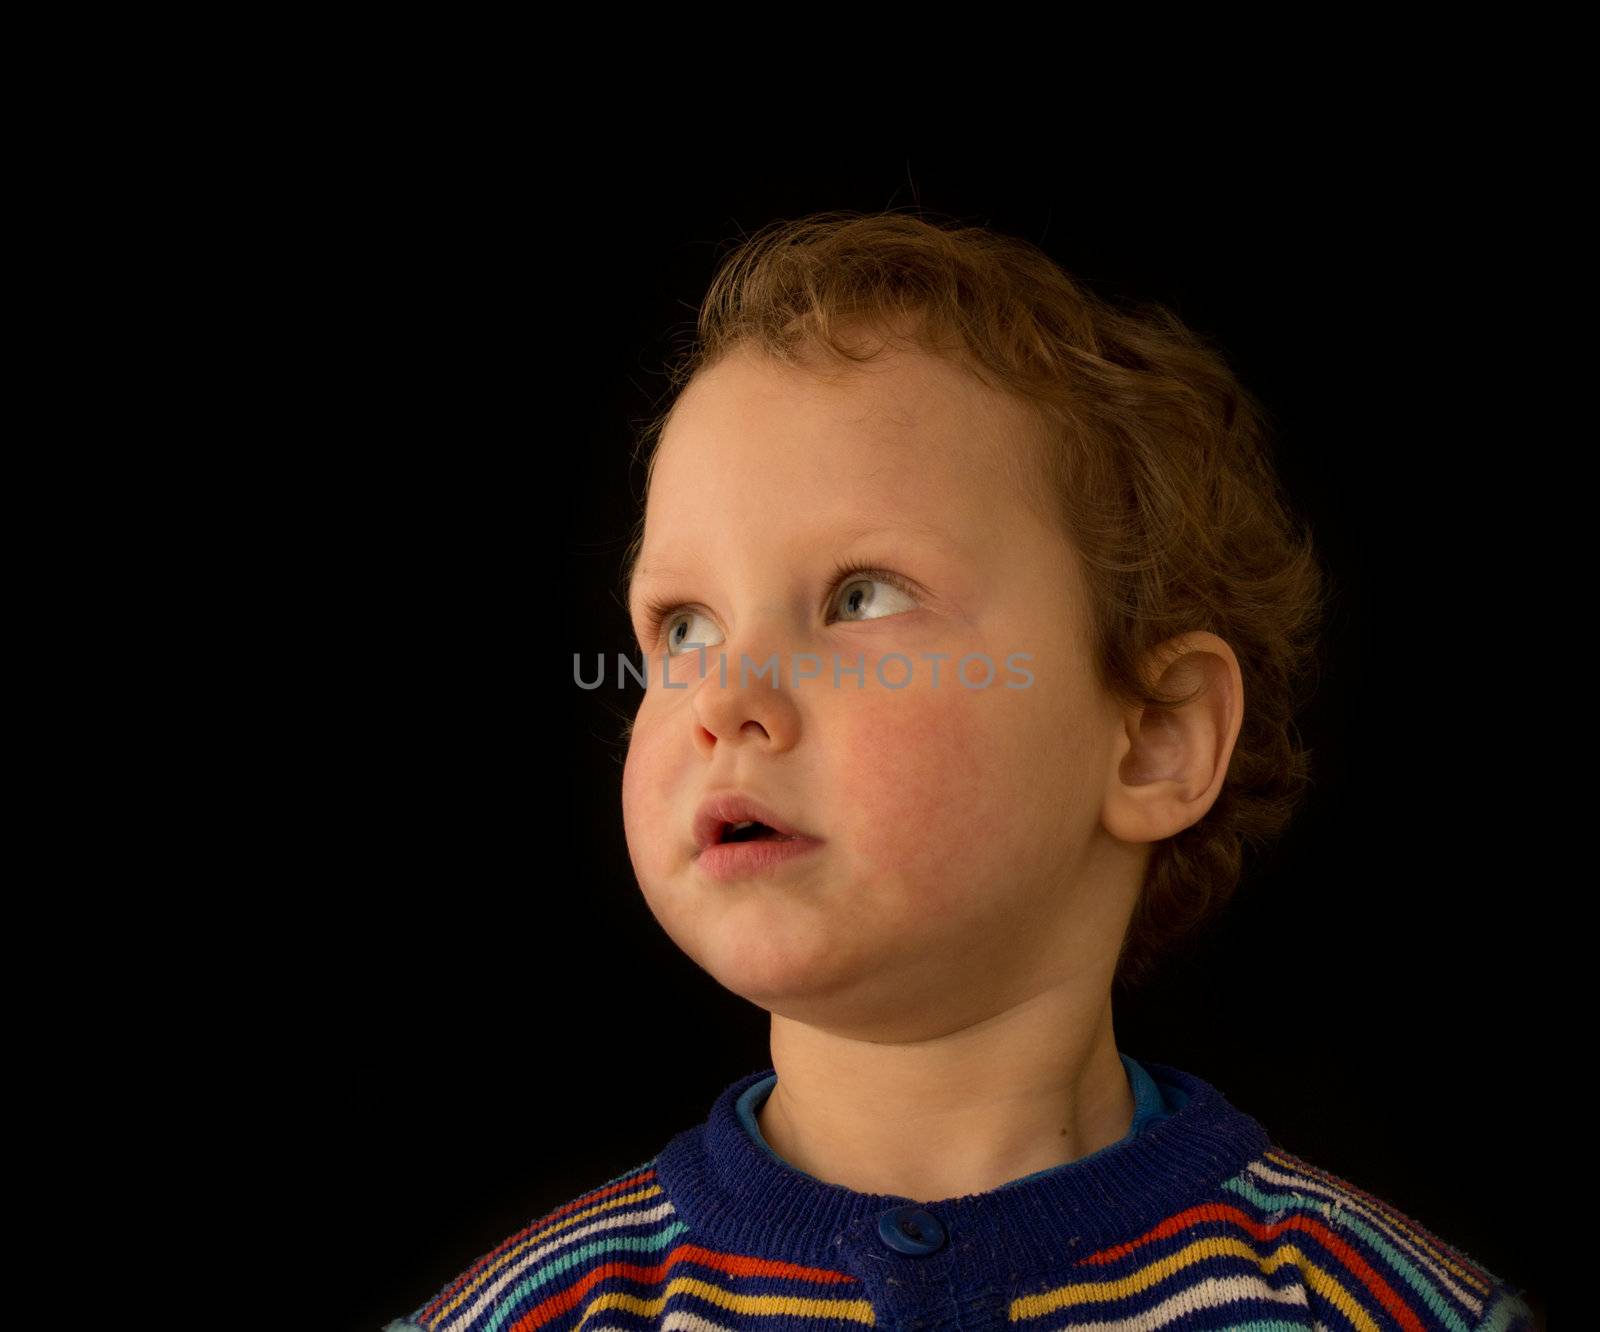 a portrait of a boy on a black background by schankz